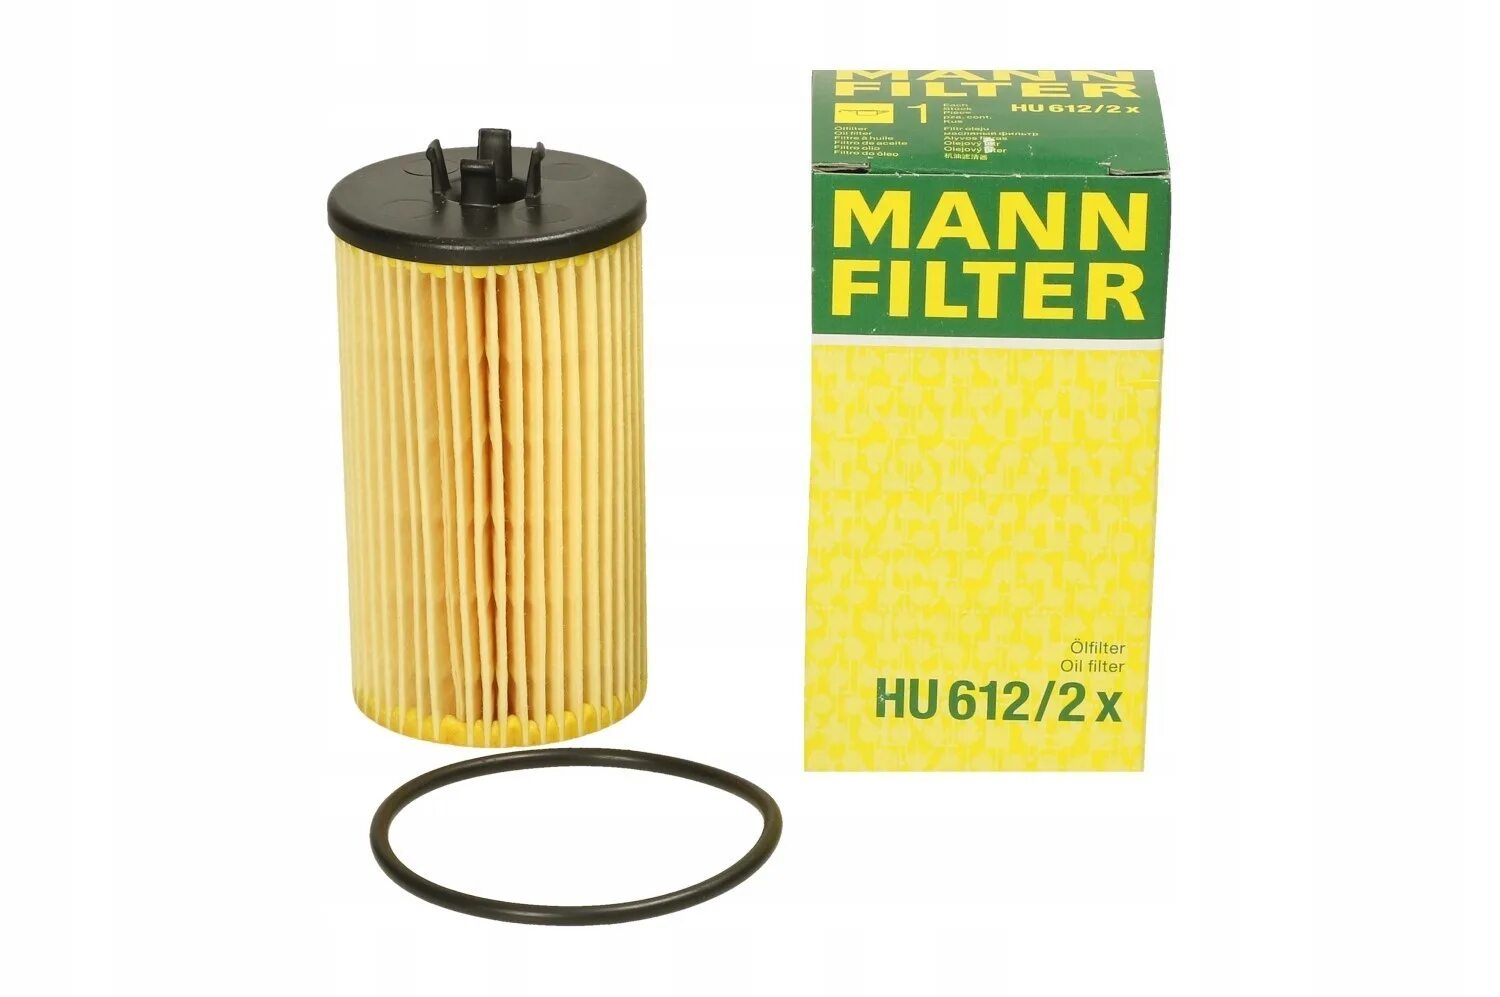 Масляный фильтр зафира б. Фильтр масляный Шевроле Круз hu 612/2x. Mann-Filter hu 612/2 x Opel Astra j. Фильтр масляный Mann-Filter hu612/2x. Hu612/2x.